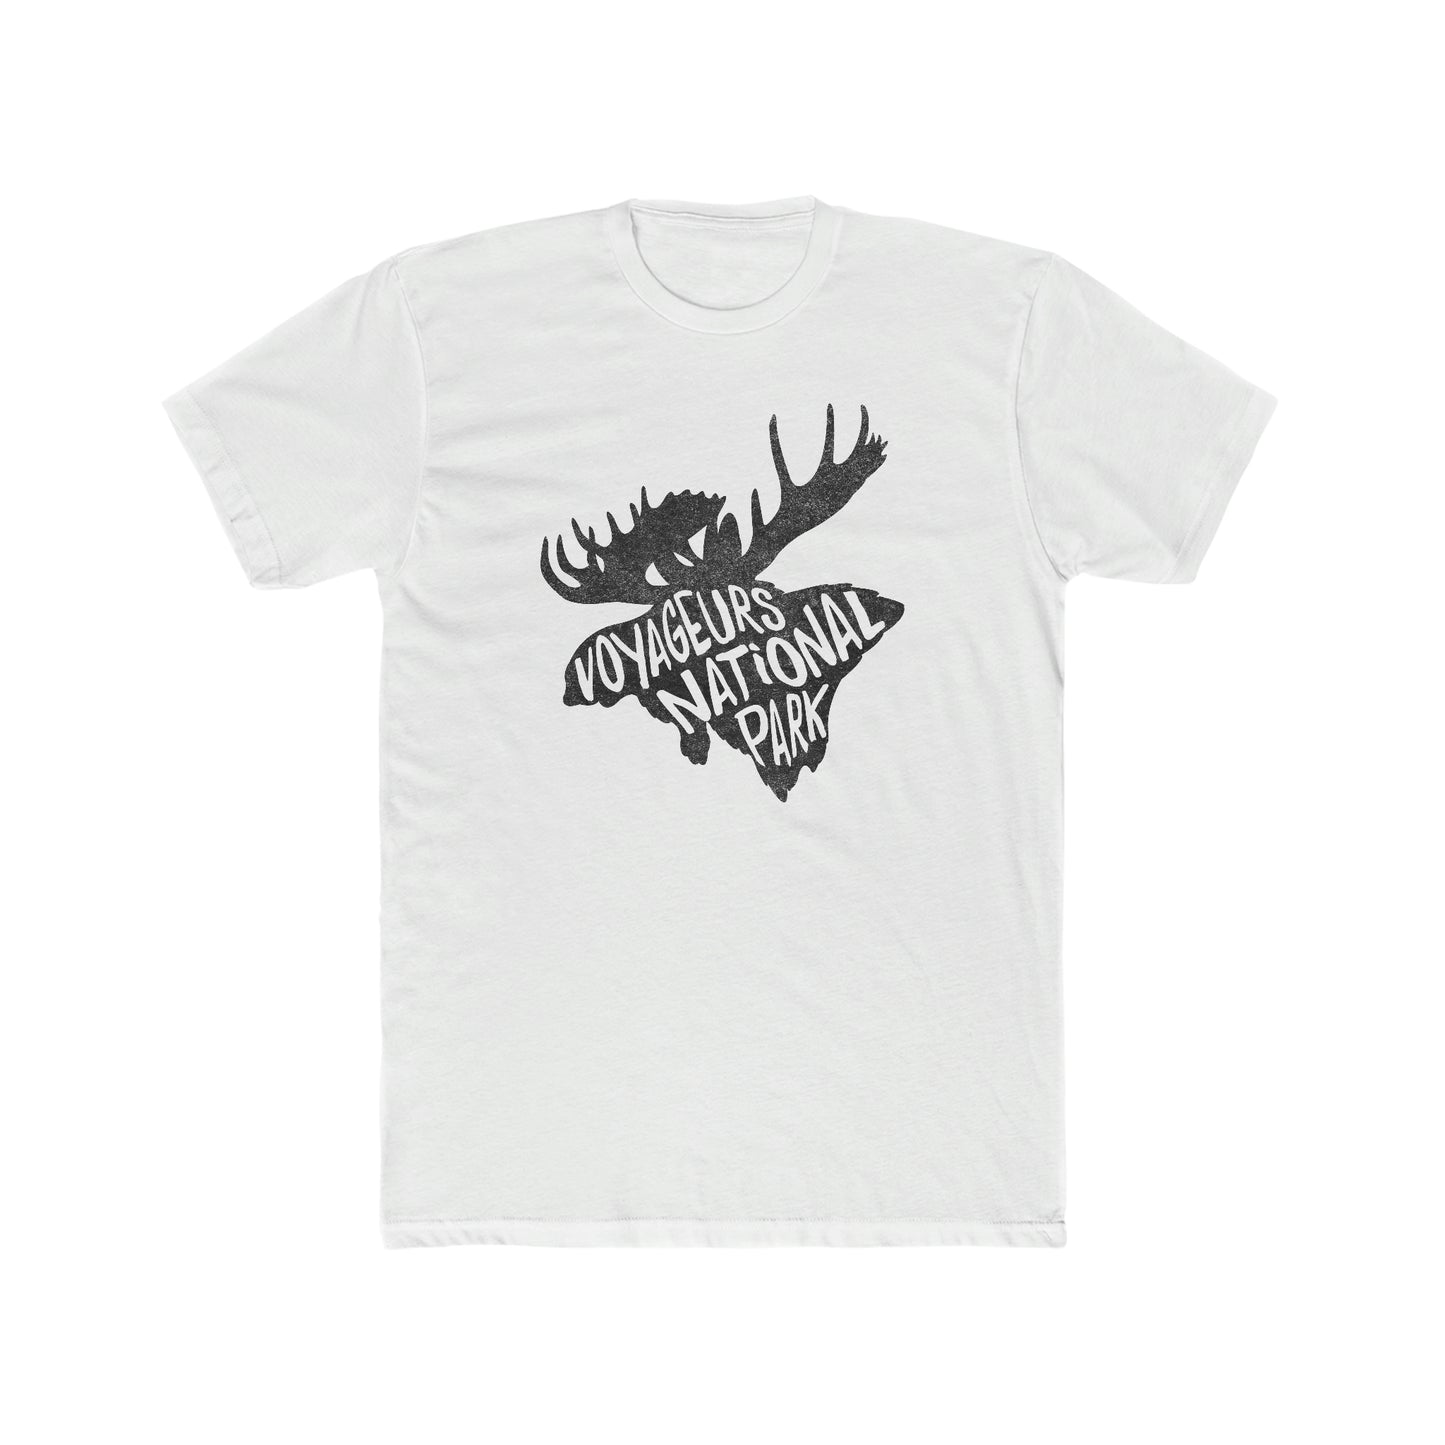 Voyageurs National Park T-Shirt - Moose